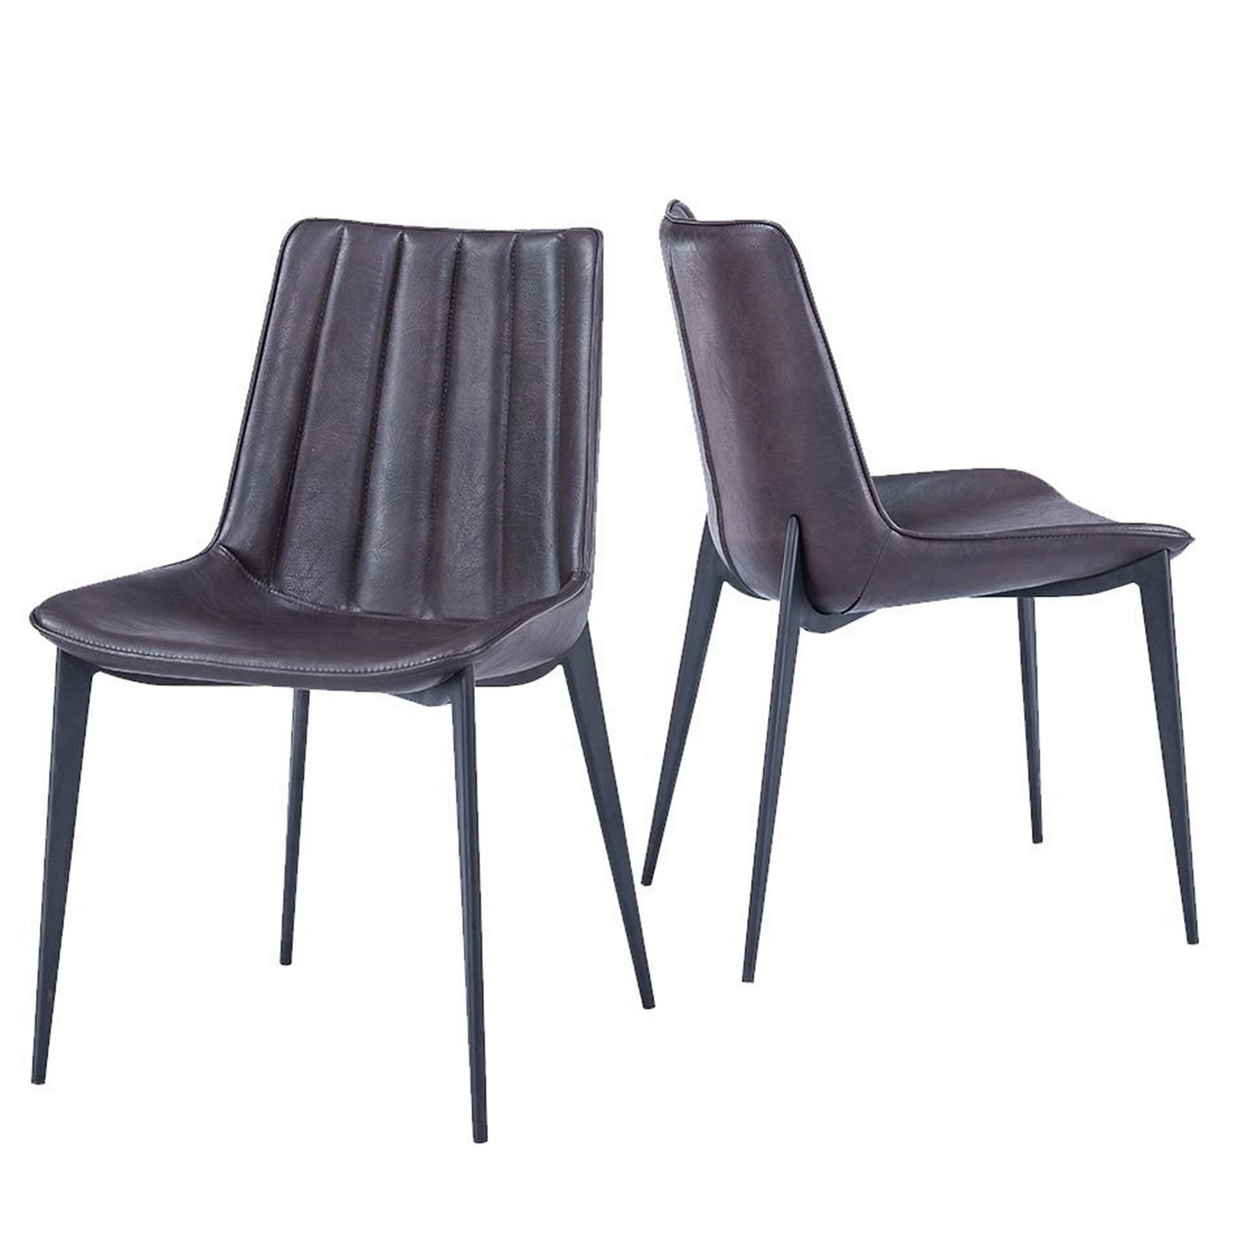 Cid 20 Inch Dining Chair, Set Of 2, Black Vegan Leather, Channel Tufted- Saltoro Sherpi